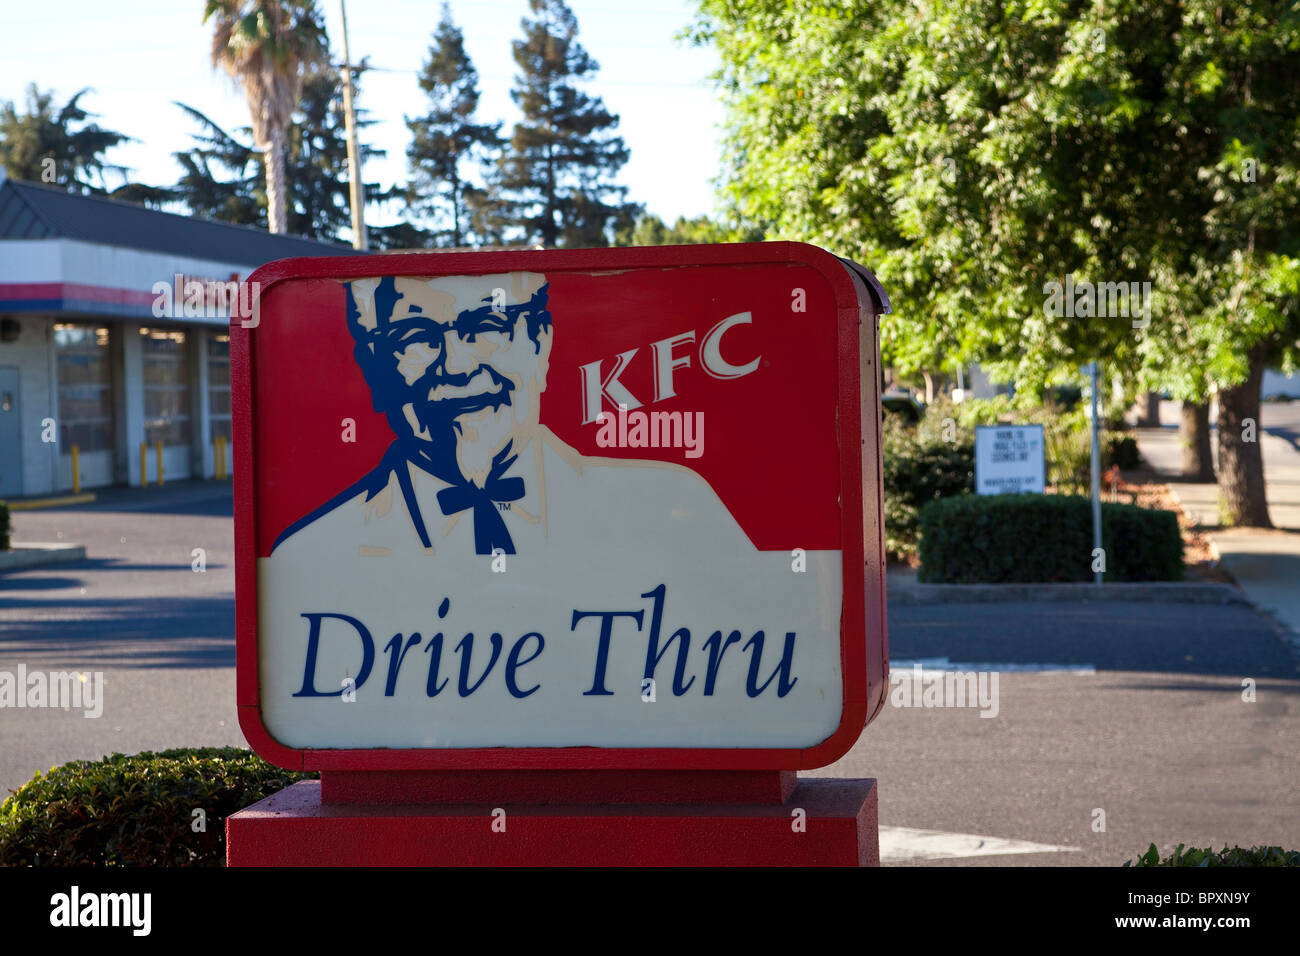 KFC drive through sign Stock Photo